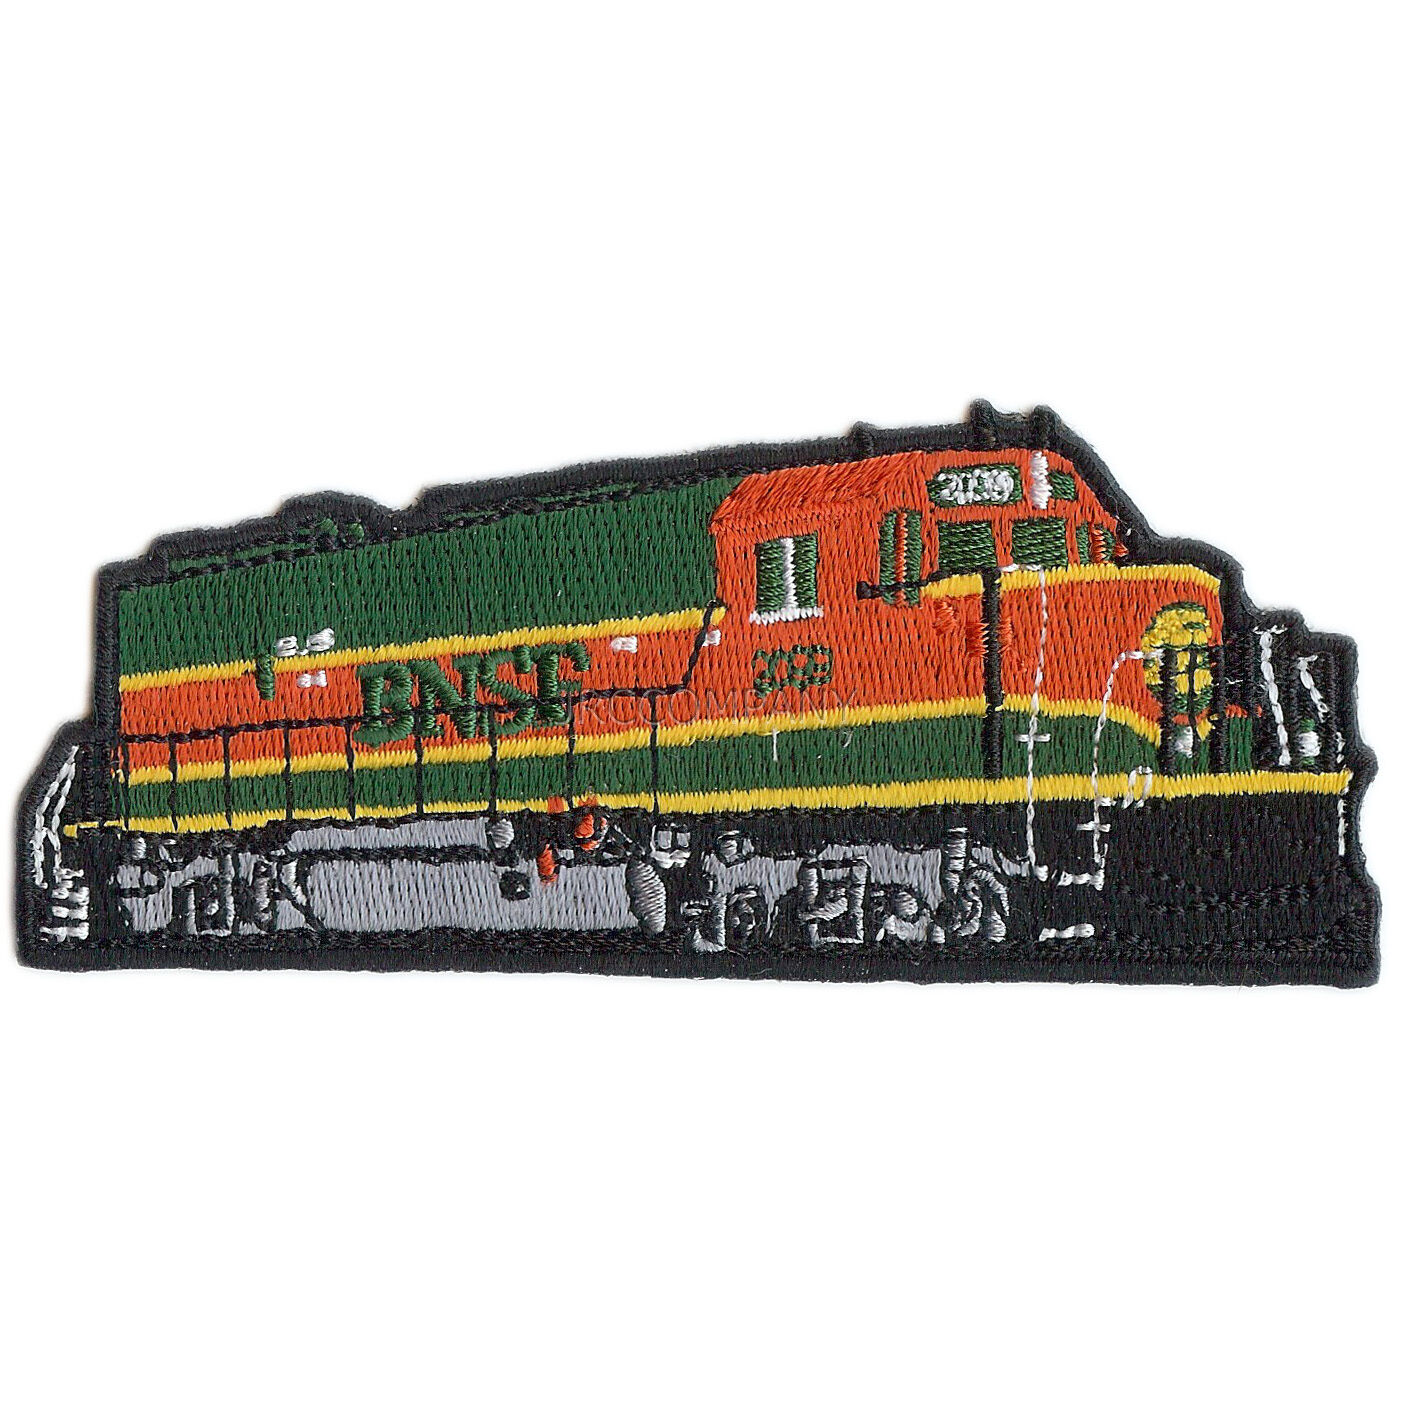 Patch- Burlington Northern Santa Fe Locomotive  (BNSF) - NEW #22309